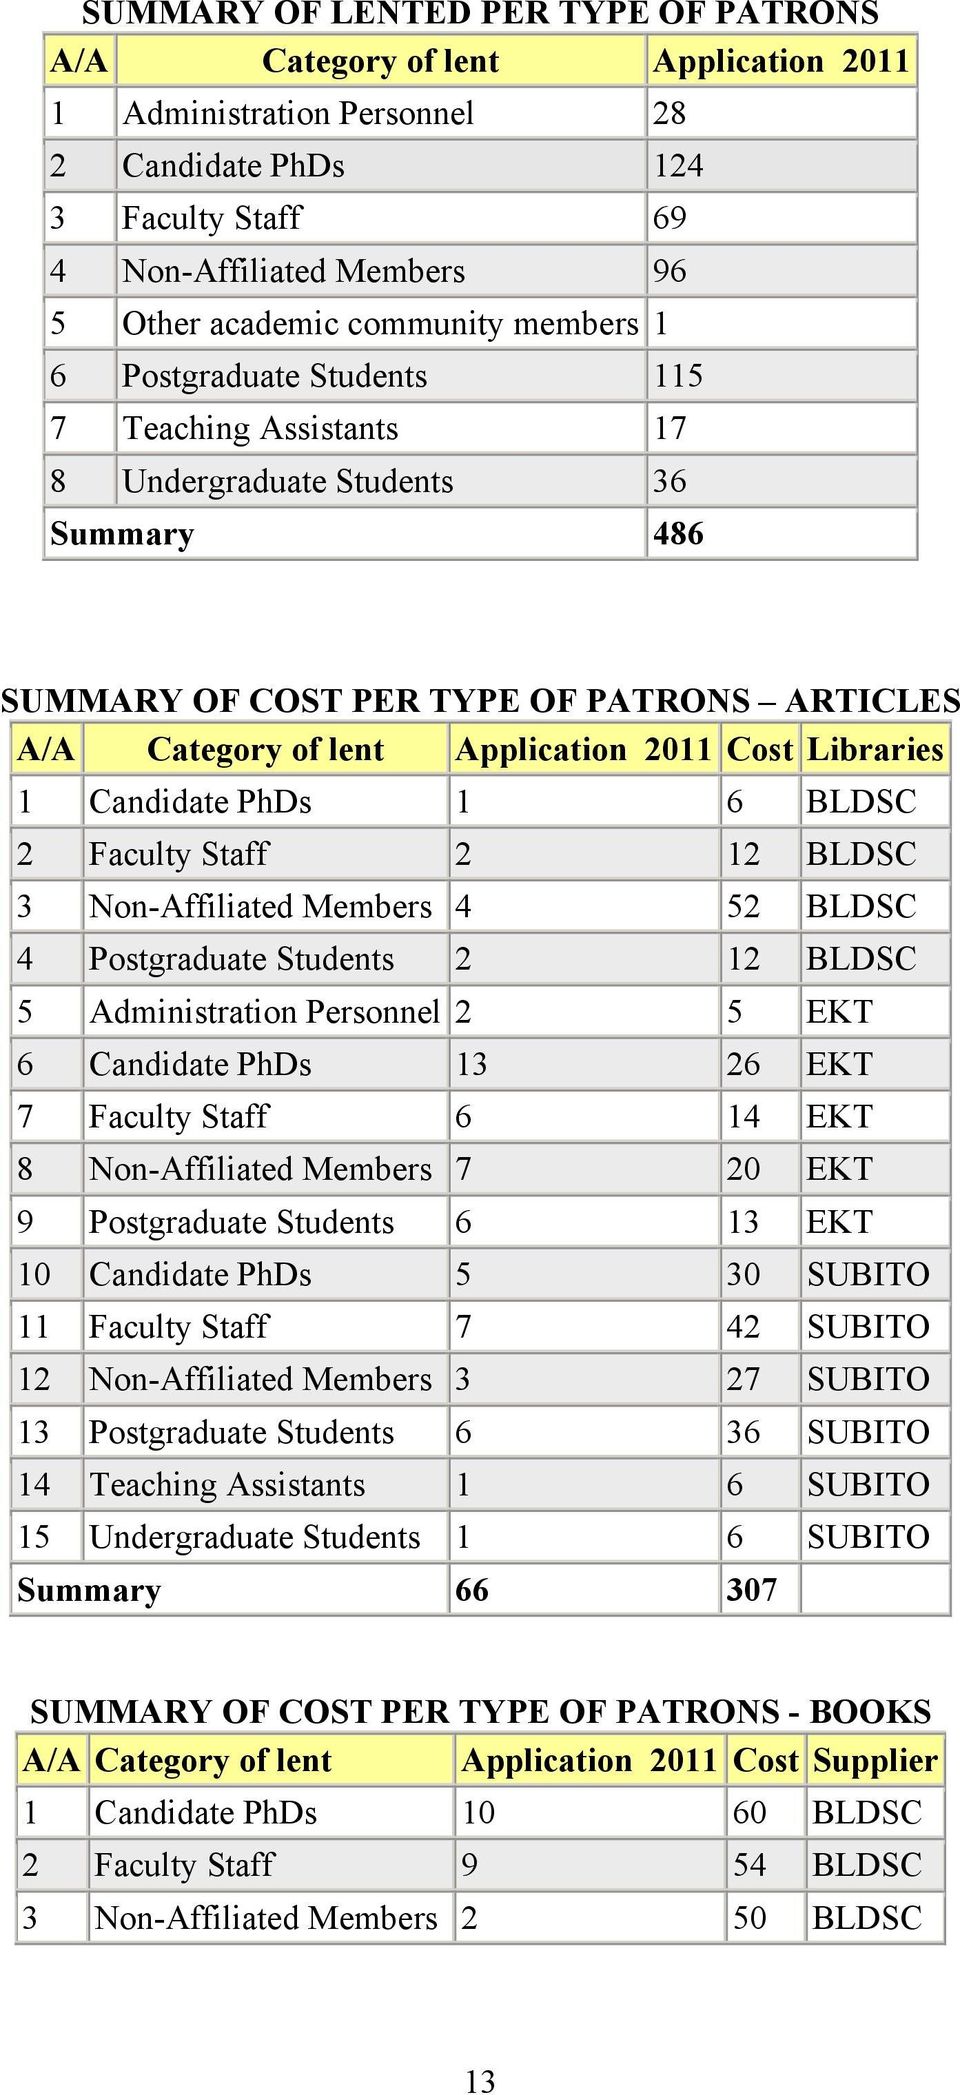 Cost Libraries 1 Candidate PhDs 1 6 BLDSC 2 Faculty Staff 2 12 BLDSC 3 Non-Affiliated Members 4 52 BLDSC 4 Postgraduate Students 2 12 BLDSC 5 Administration Personnel 2 5 EKT 6 Candidate PhDs 13 26